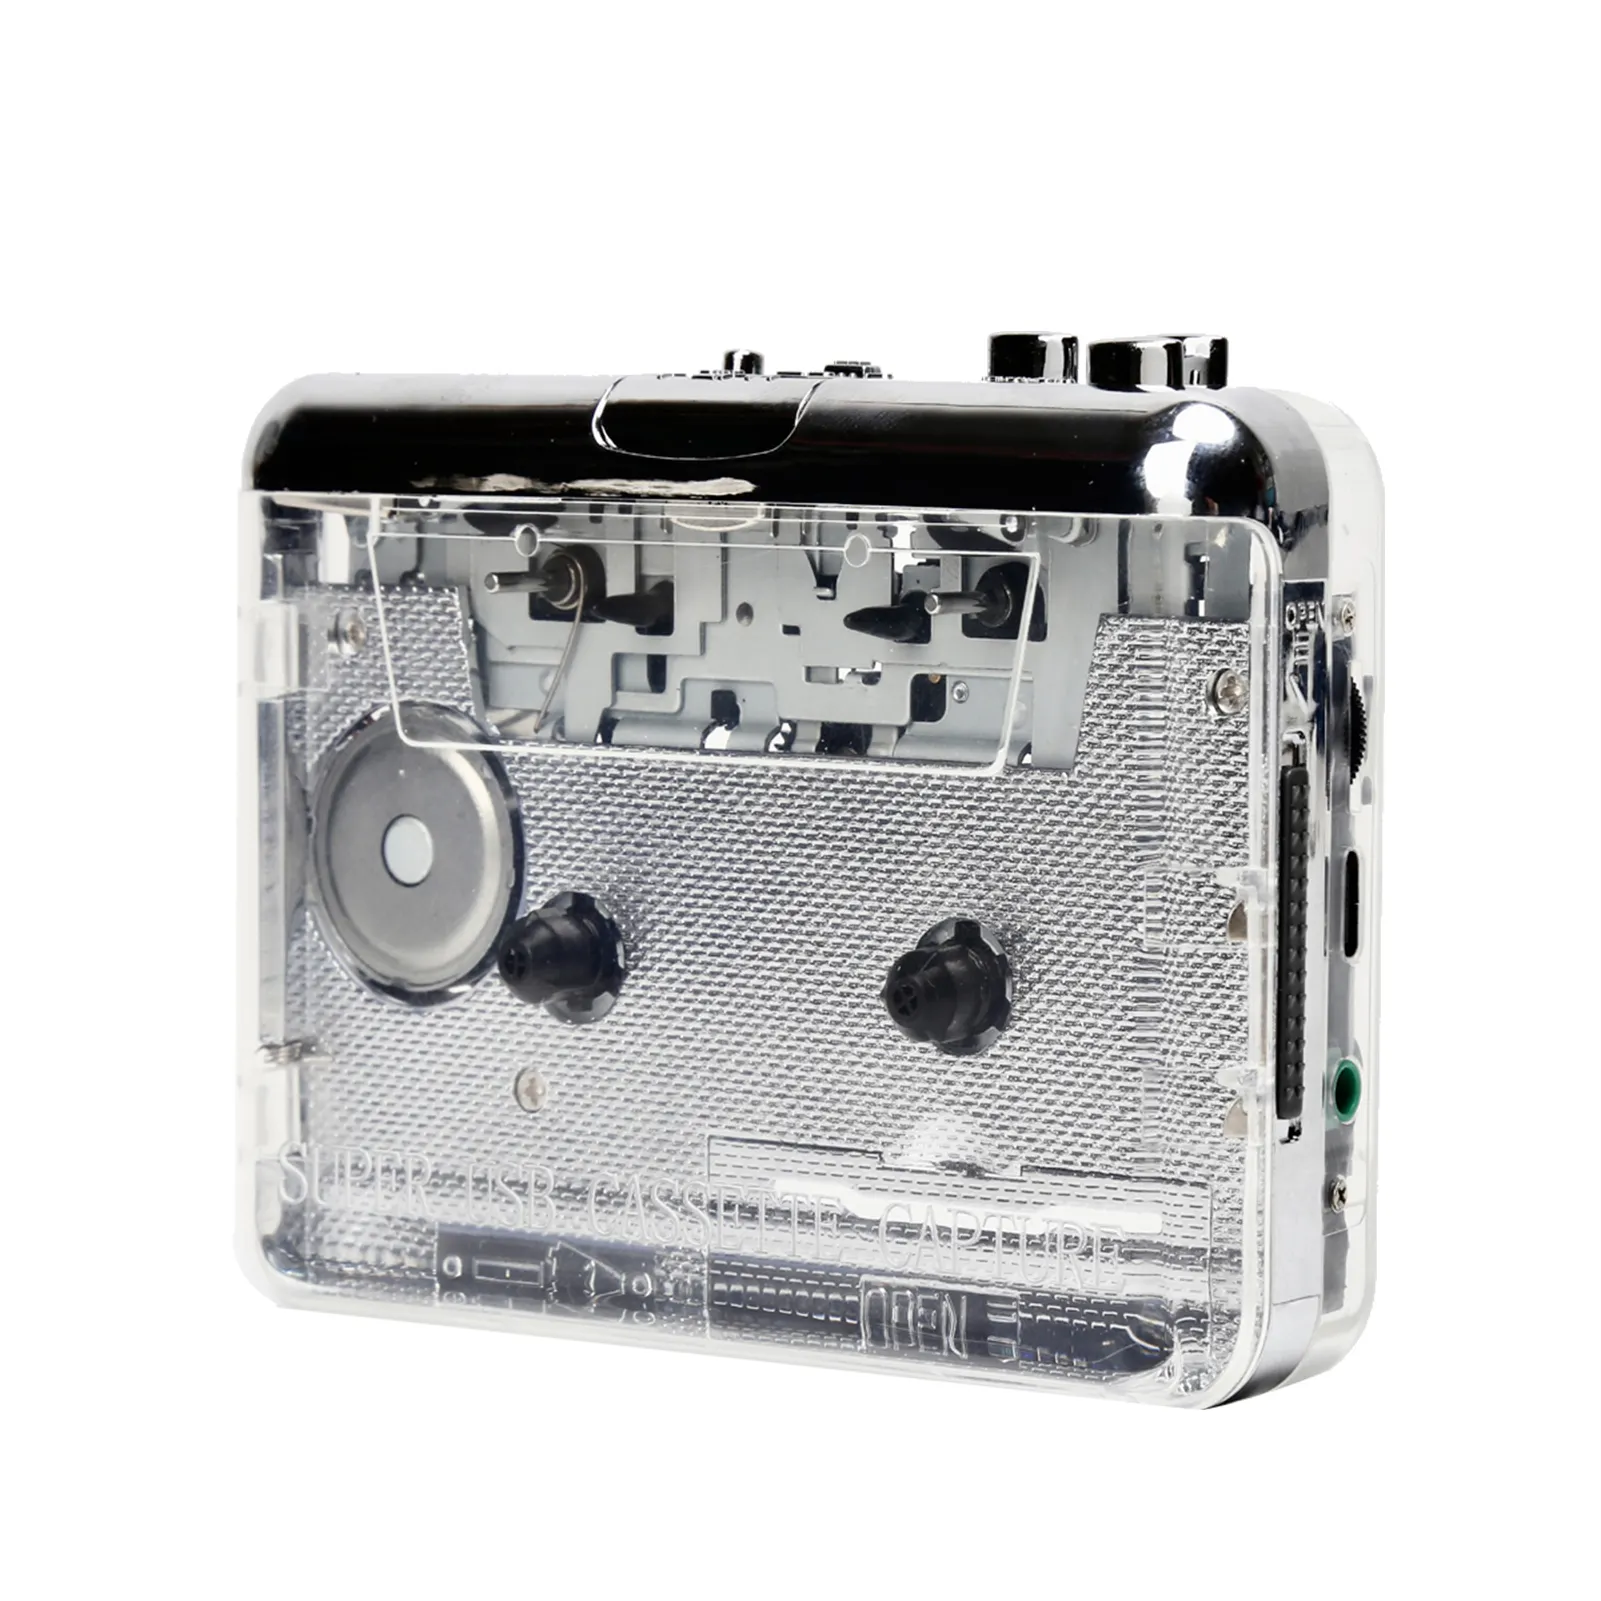 TONIVENT TON010 kaset portabel ke pemutar MP3, pemutar pita USB Mini, konverter MP3 dengan Input perangkat lunak AUX 3.5mm